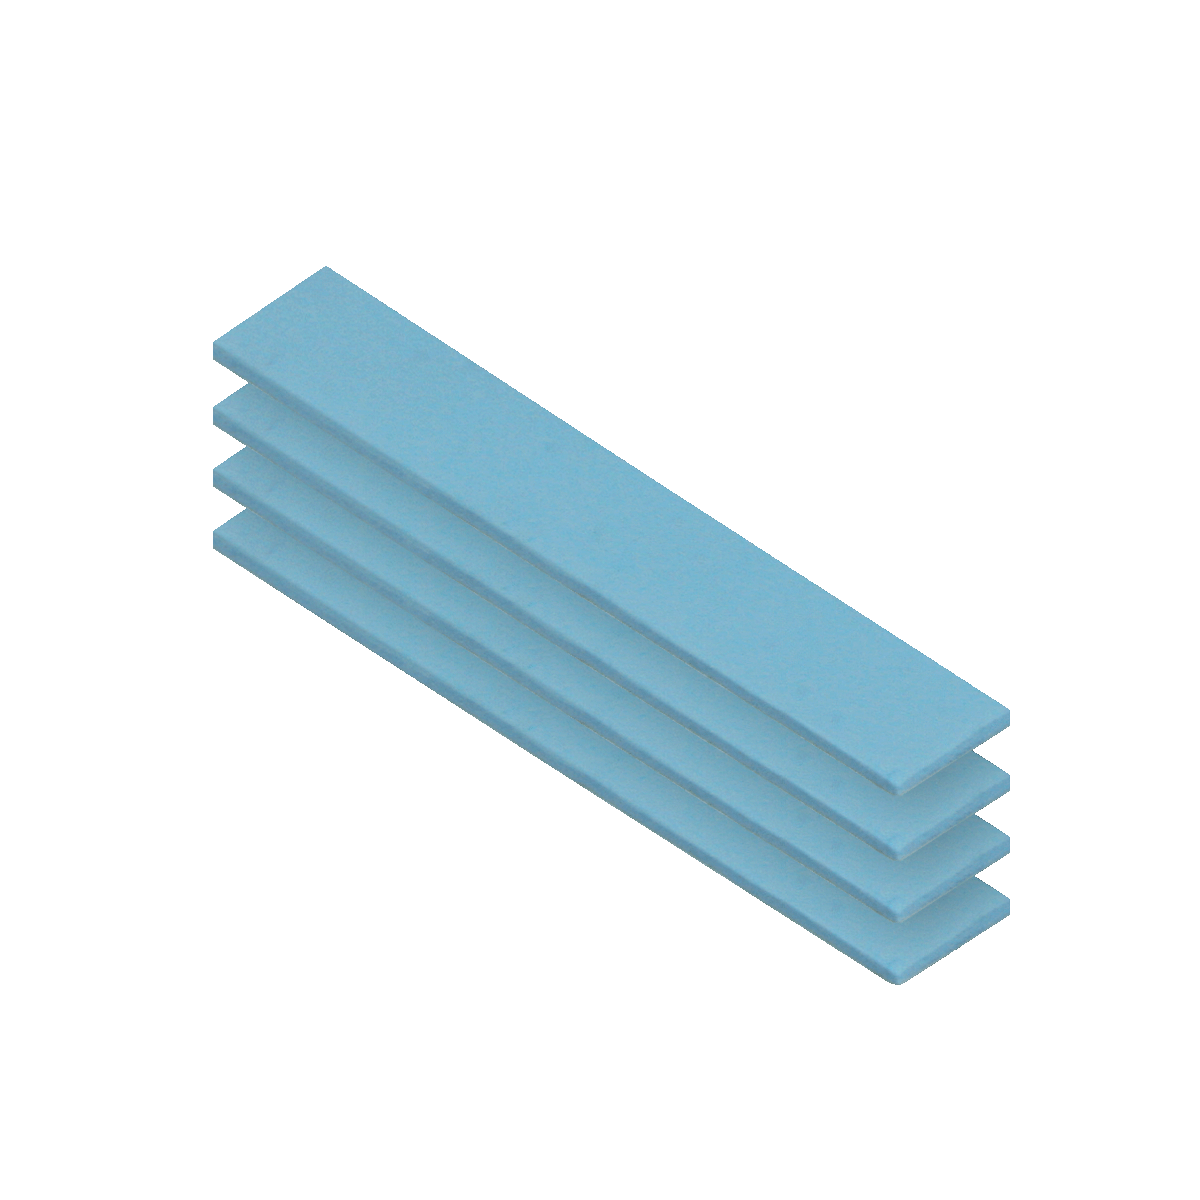 Термопрокладка Arctic Cooling TP-3 - 4 Pack, коробка, 120x20x1.5мм, синий (ACTPD00057A)